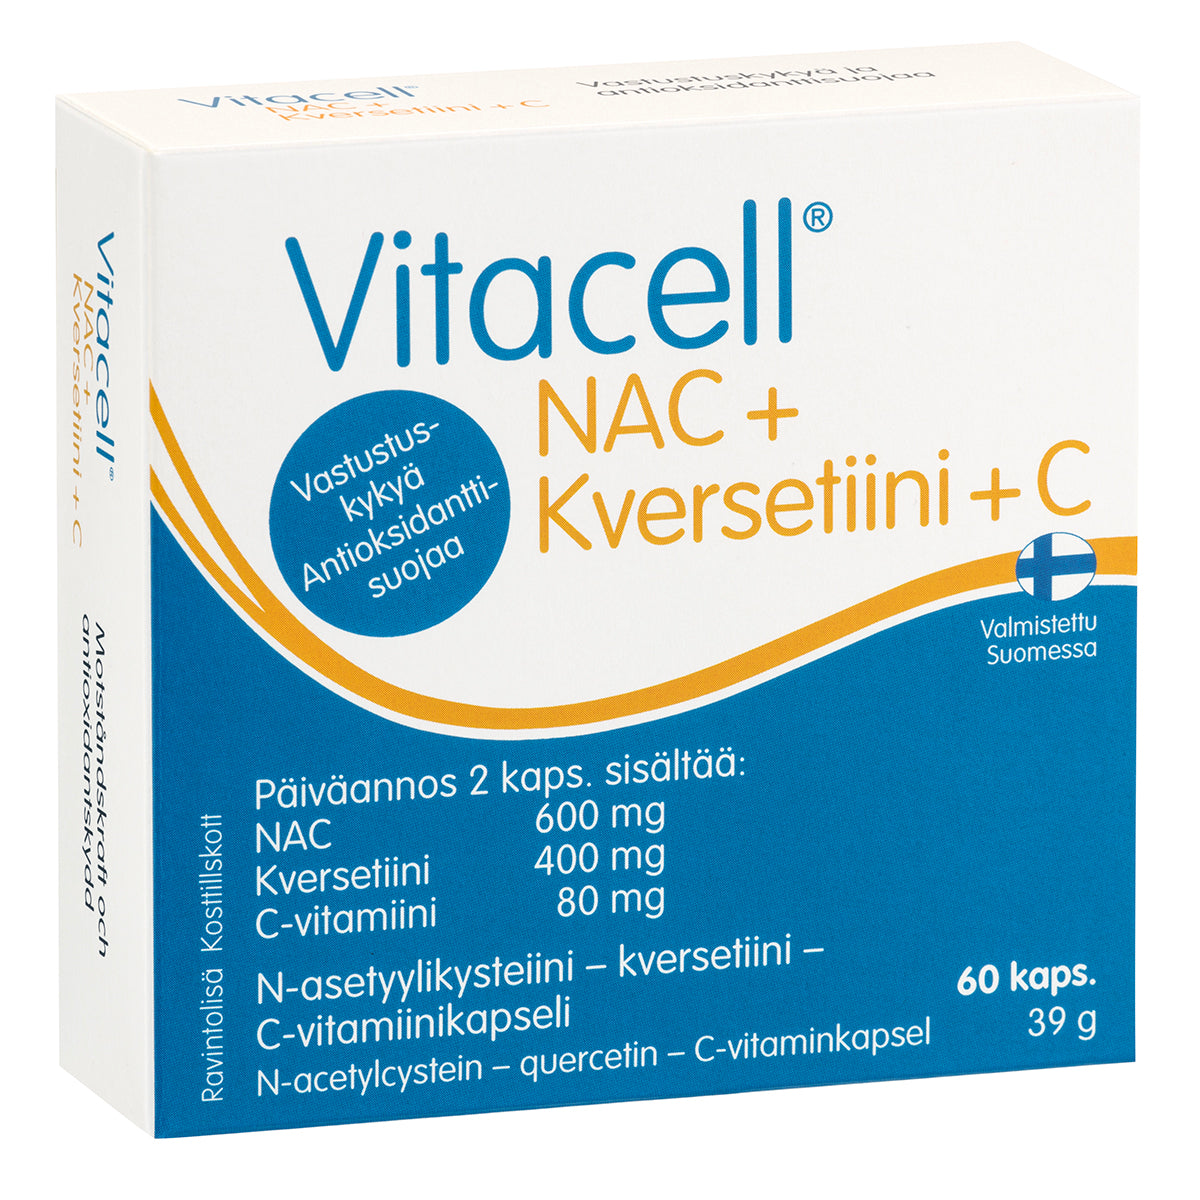 Vitacell NAC+ Kversetiini + C 60 kaps.